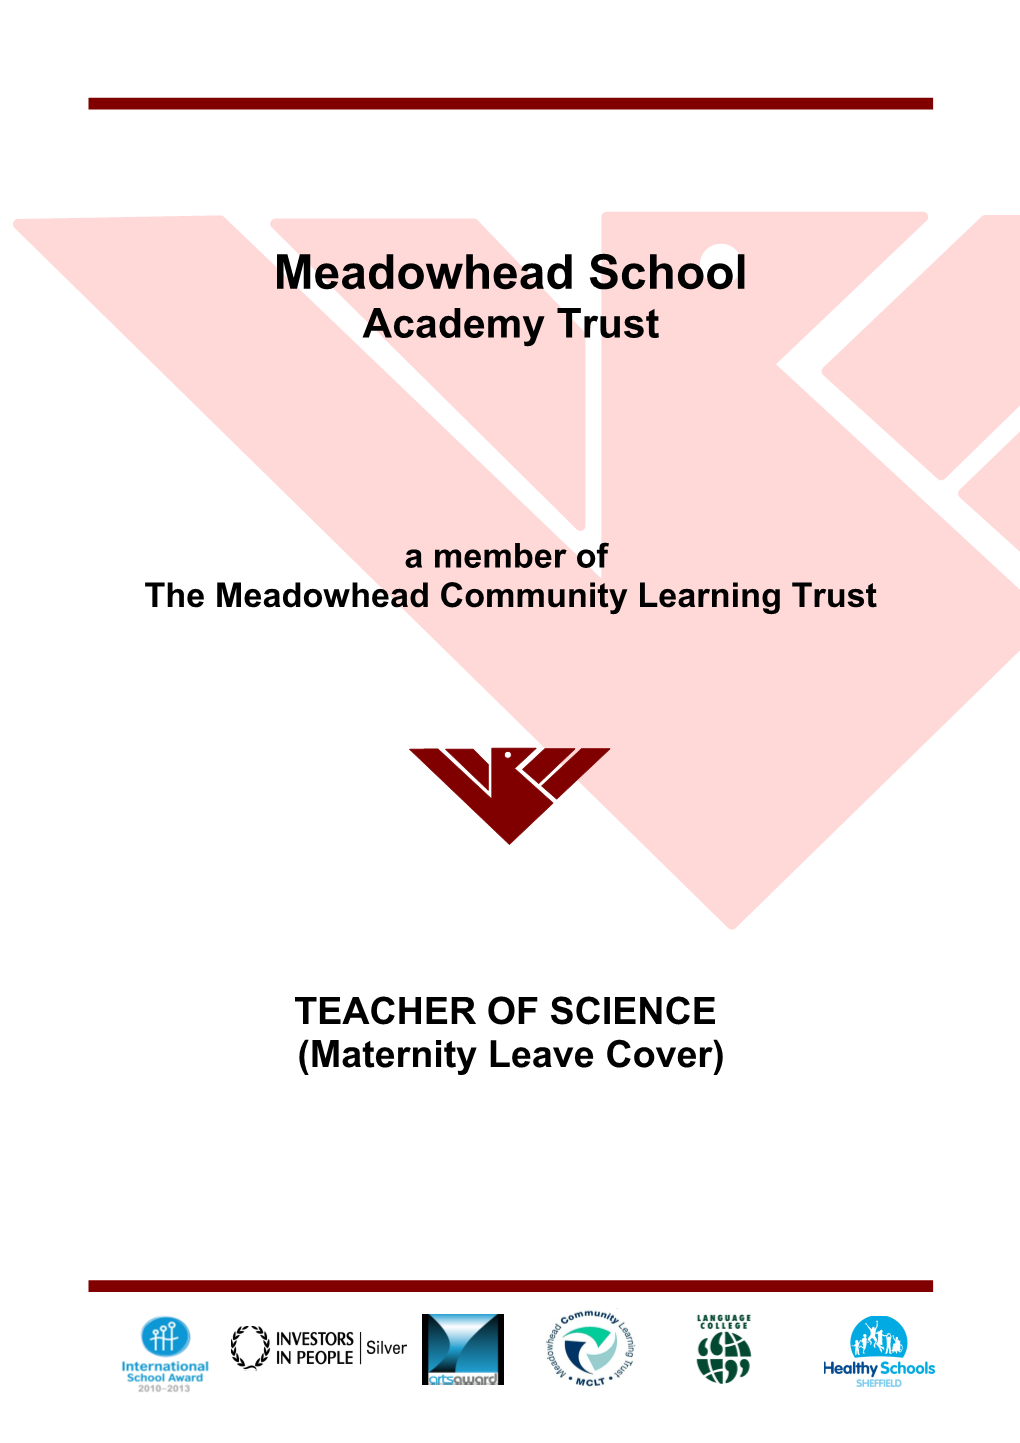 The Meadowhead Community Learning Trust